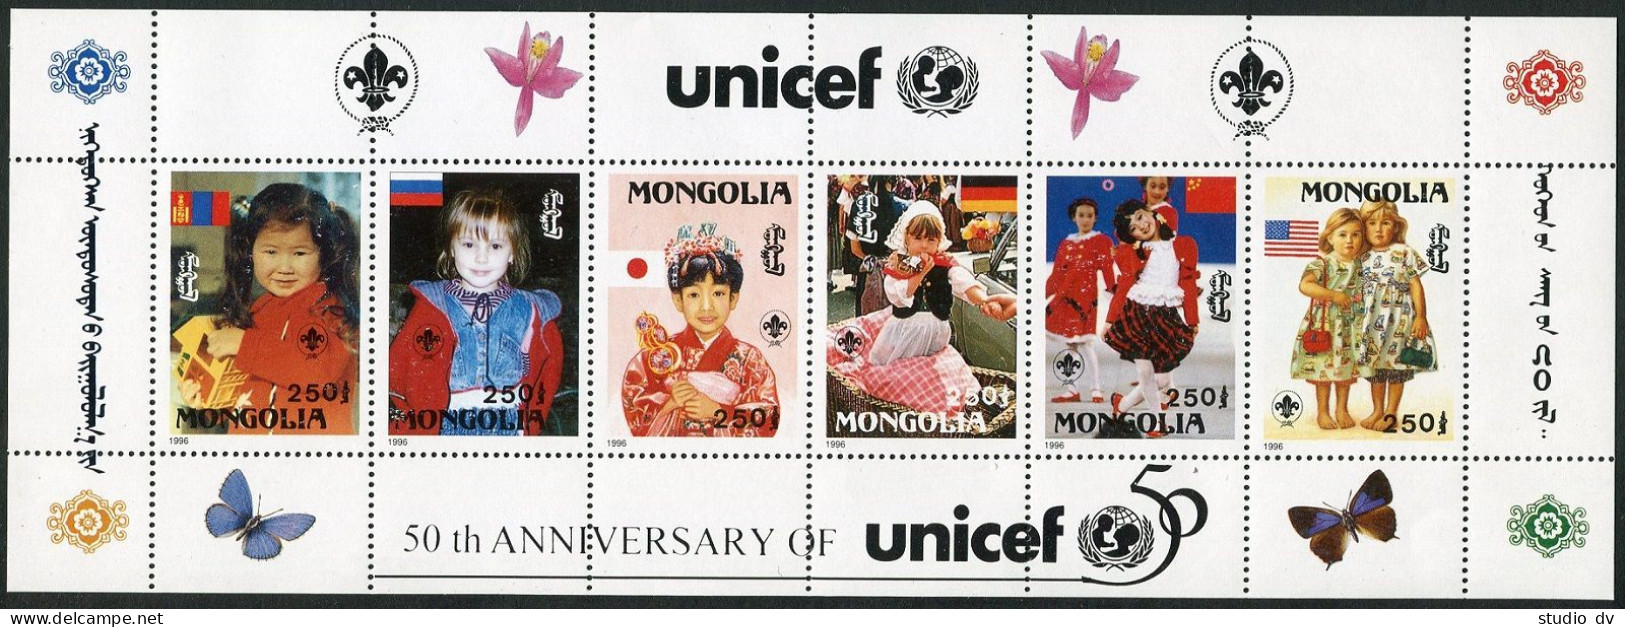 Mongolia 2247J-Oq Sheet,MNH. UNICEF 1996.Children,Scouting Emblem.Flags. - Mongolia